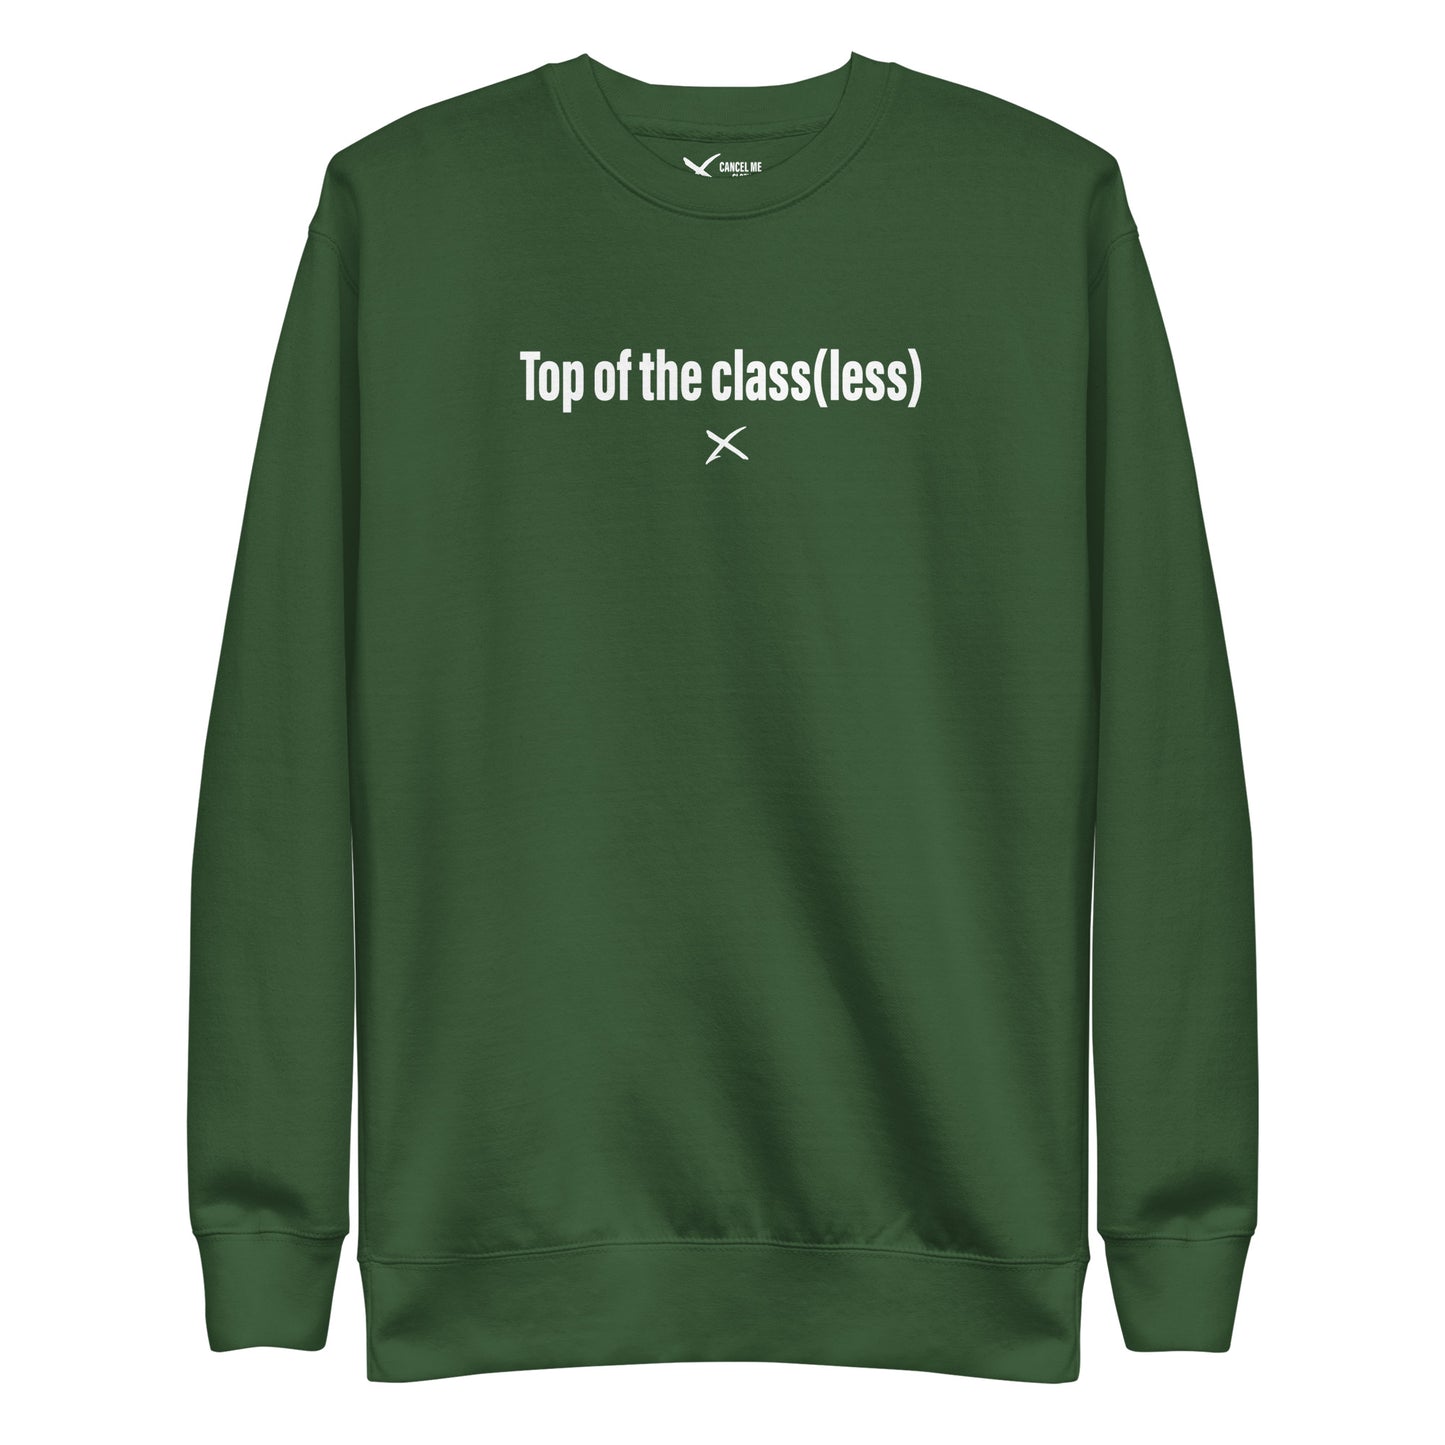 Top of the class(less) - Sweatshirt